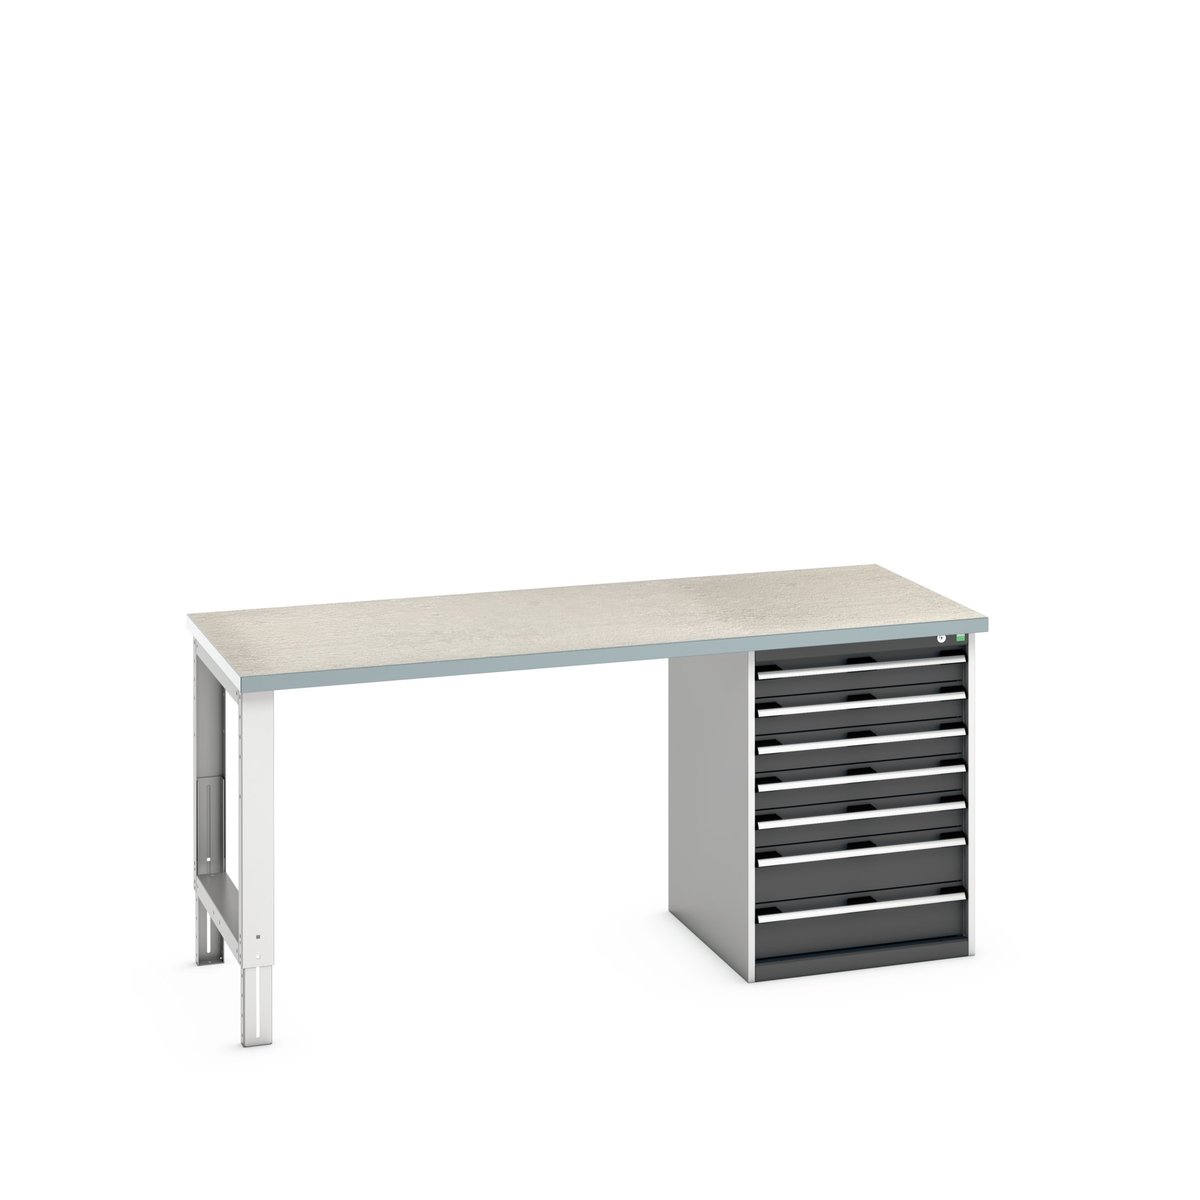 41004124. - cubio pedestal bench (lino)